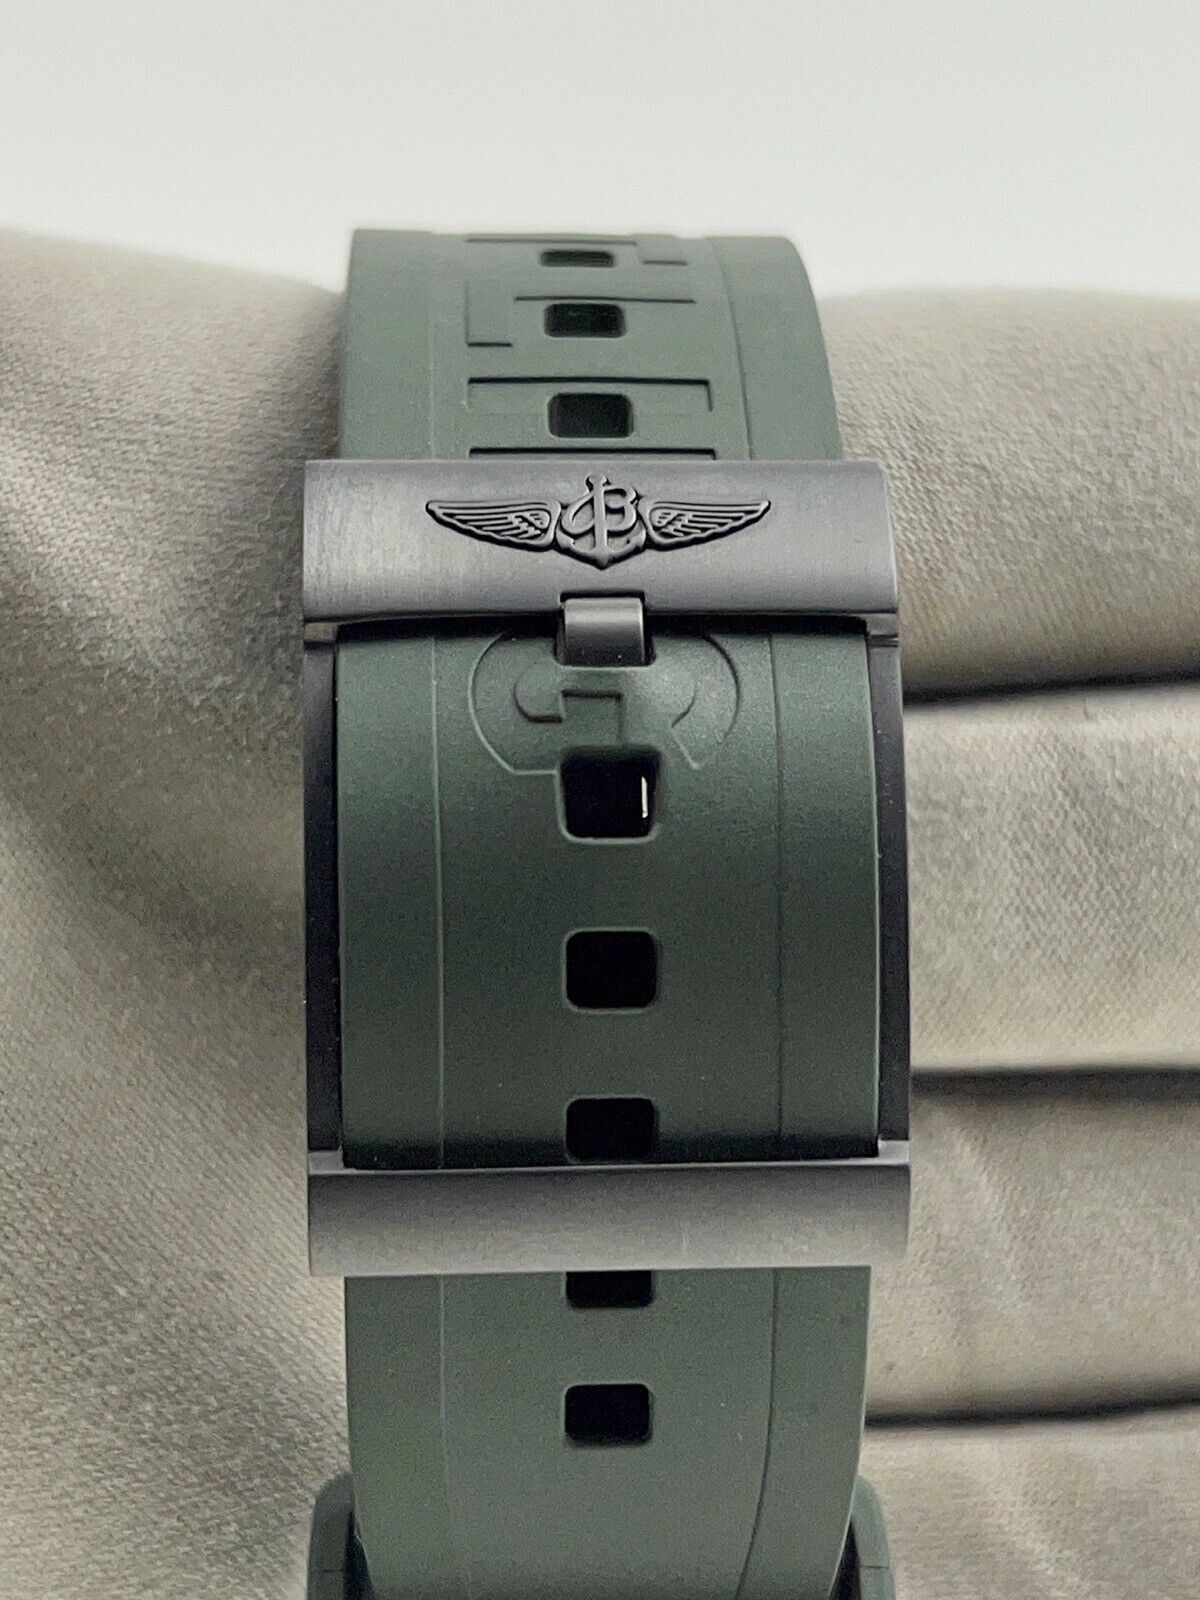 Breitling Superocean Titanium Green 48mm Automatic Men’s Watch - Box/Paper